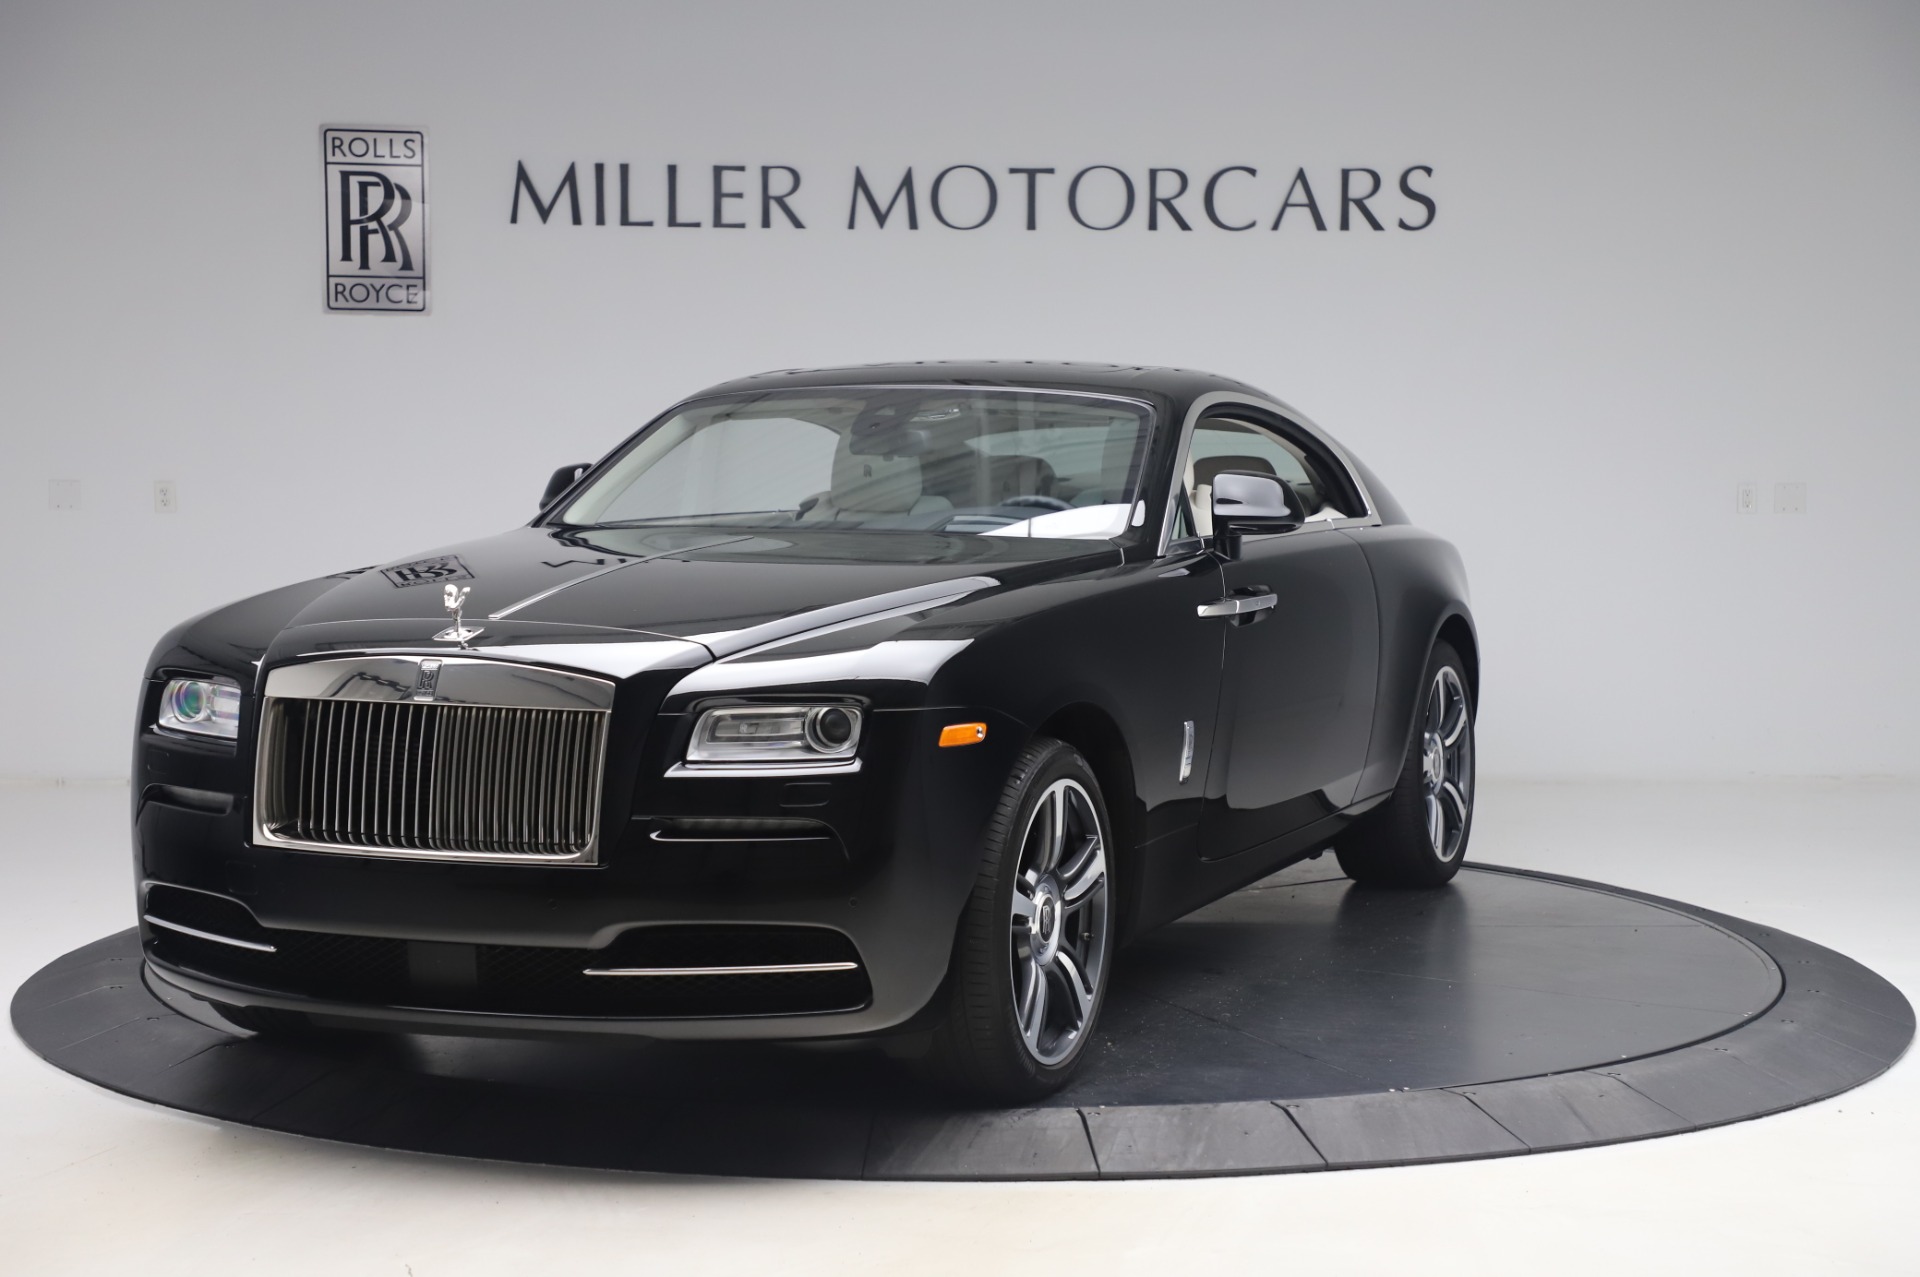 Road Test Review  2018 Rolls Royce Wraith Black Badge  By Carl Malek   LATEST NEWS  CarRevsDailycom